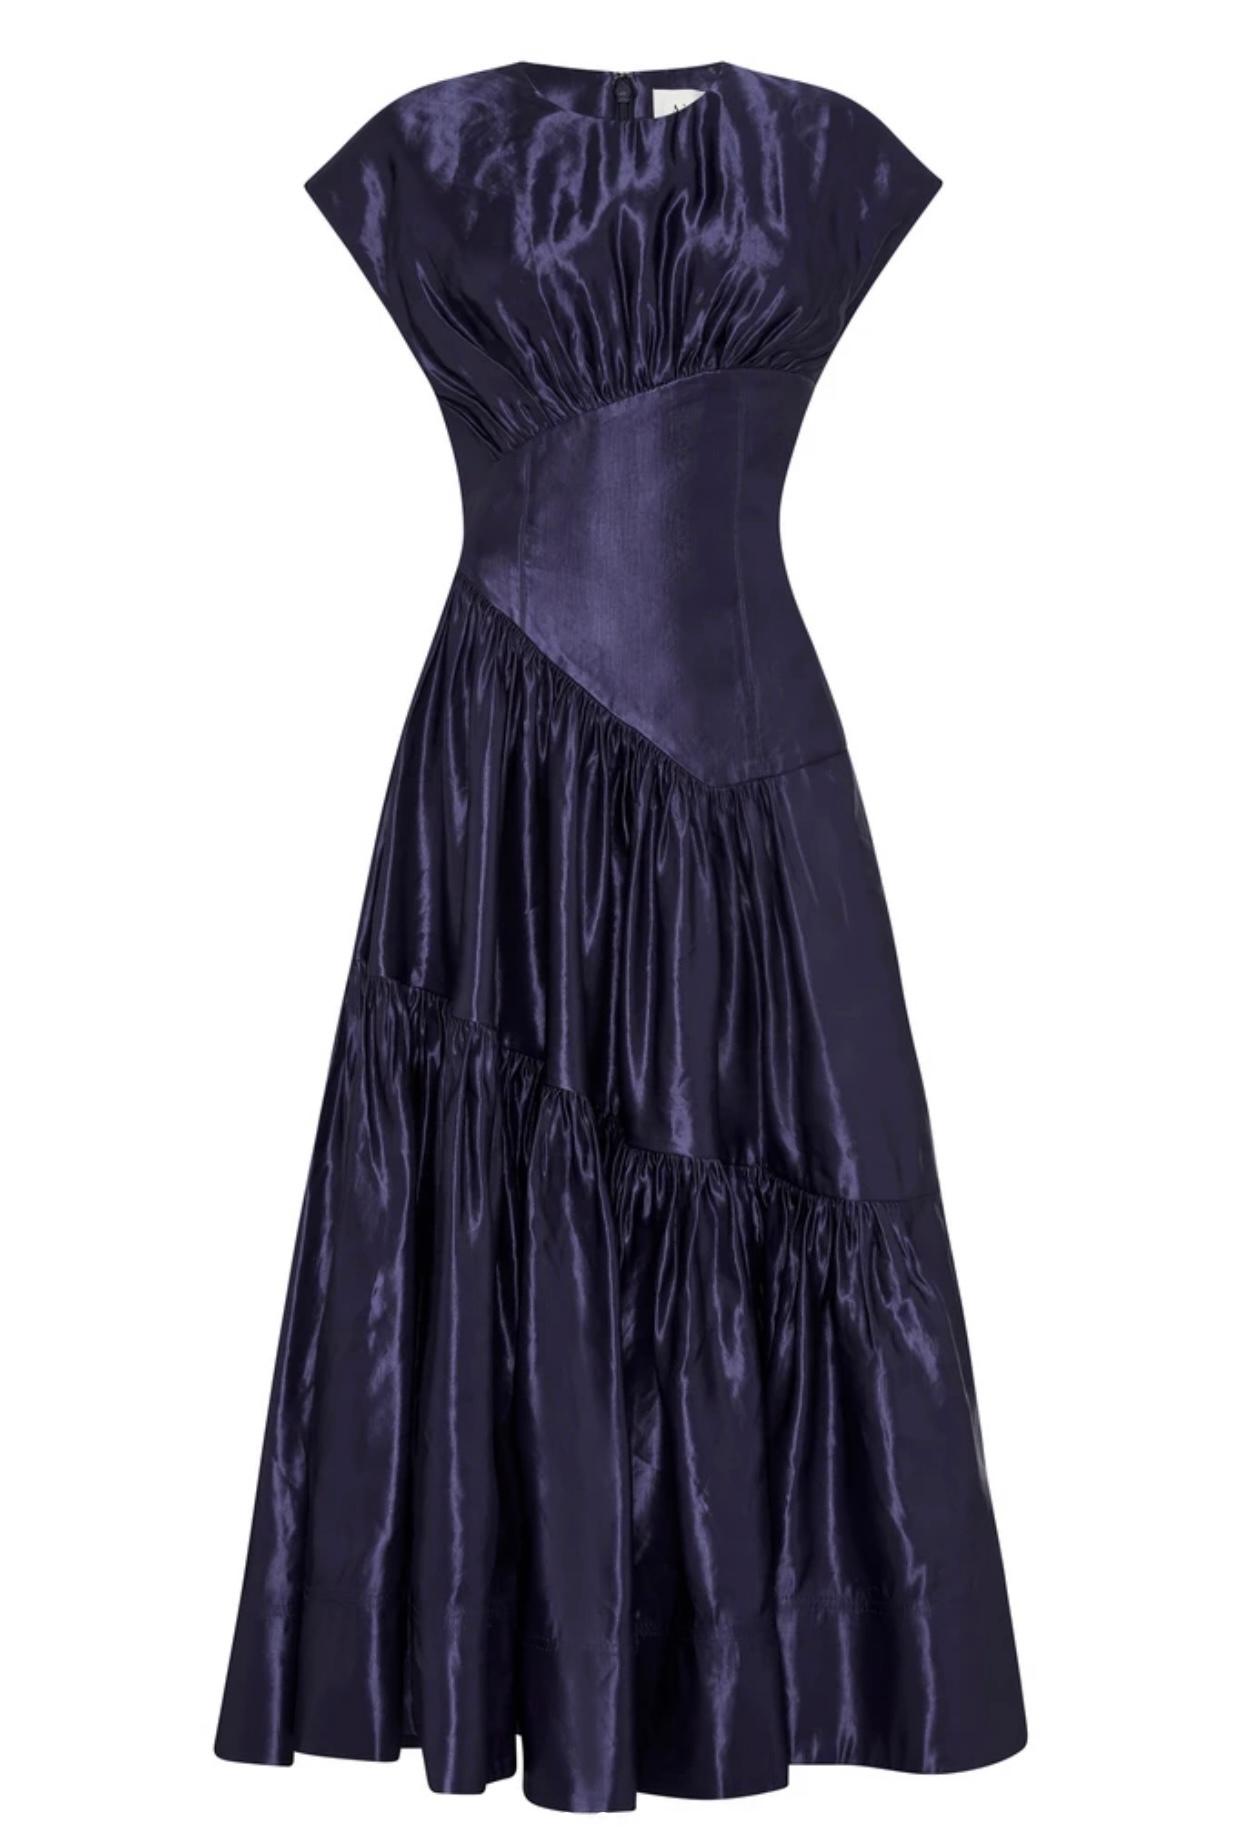 Aje AJE Serendipity Reflection Midi Dress (Navy Blue) - RRP $595 - 5b631594-6cfd-48e4-9216-b33fc2771154.jpg